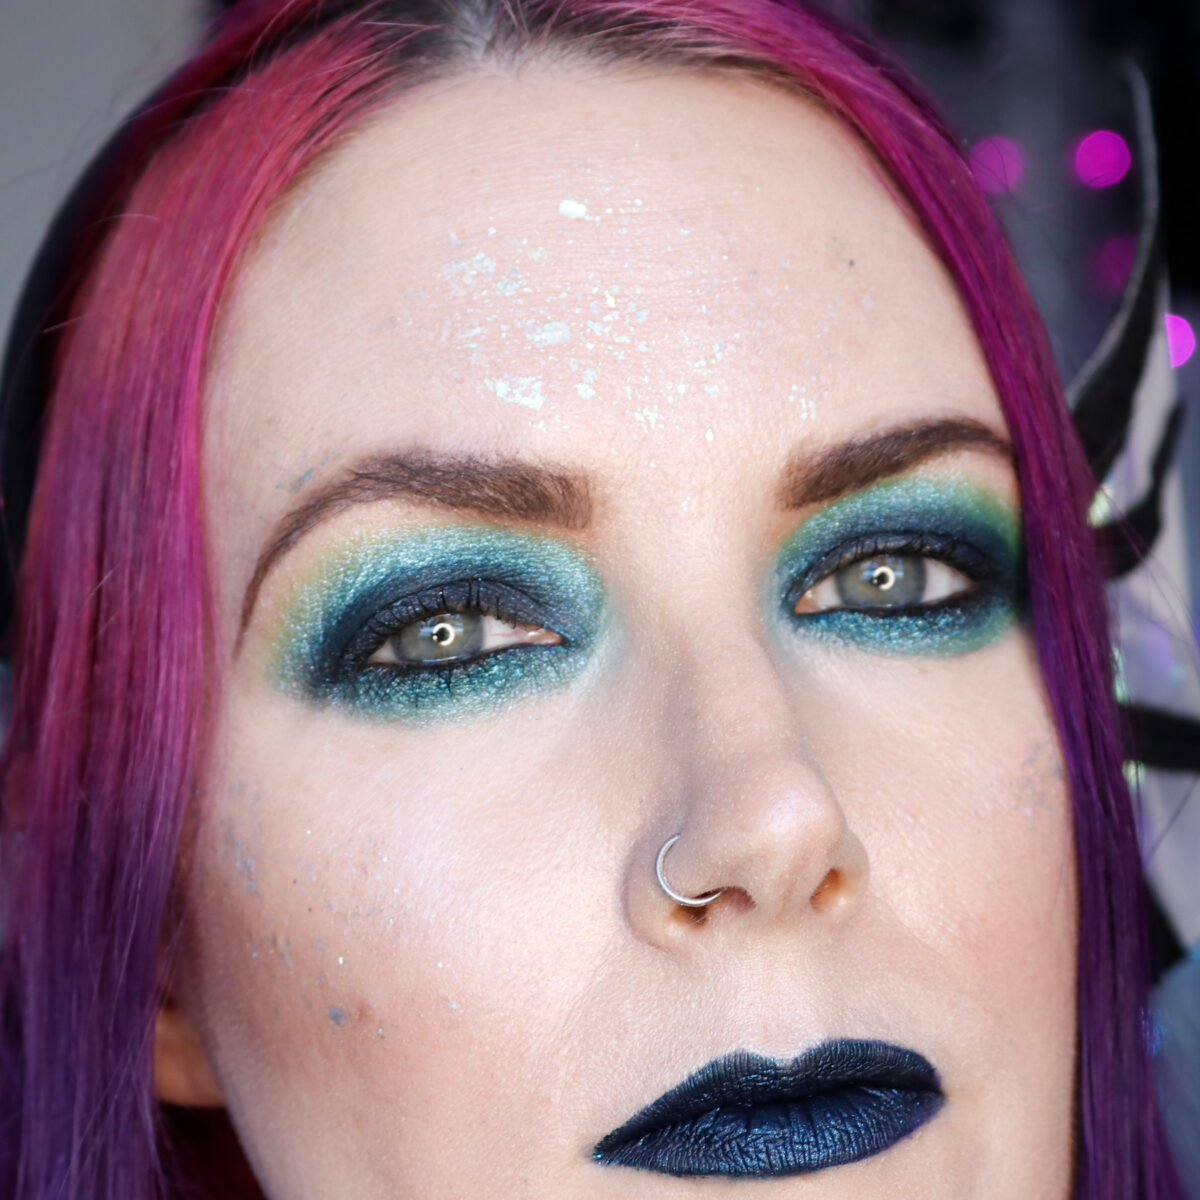 Cordelia used Danessa Myricks Infinite Chrome Flakies in Pixie Dust to mimic iridescent mermaid skin on her face